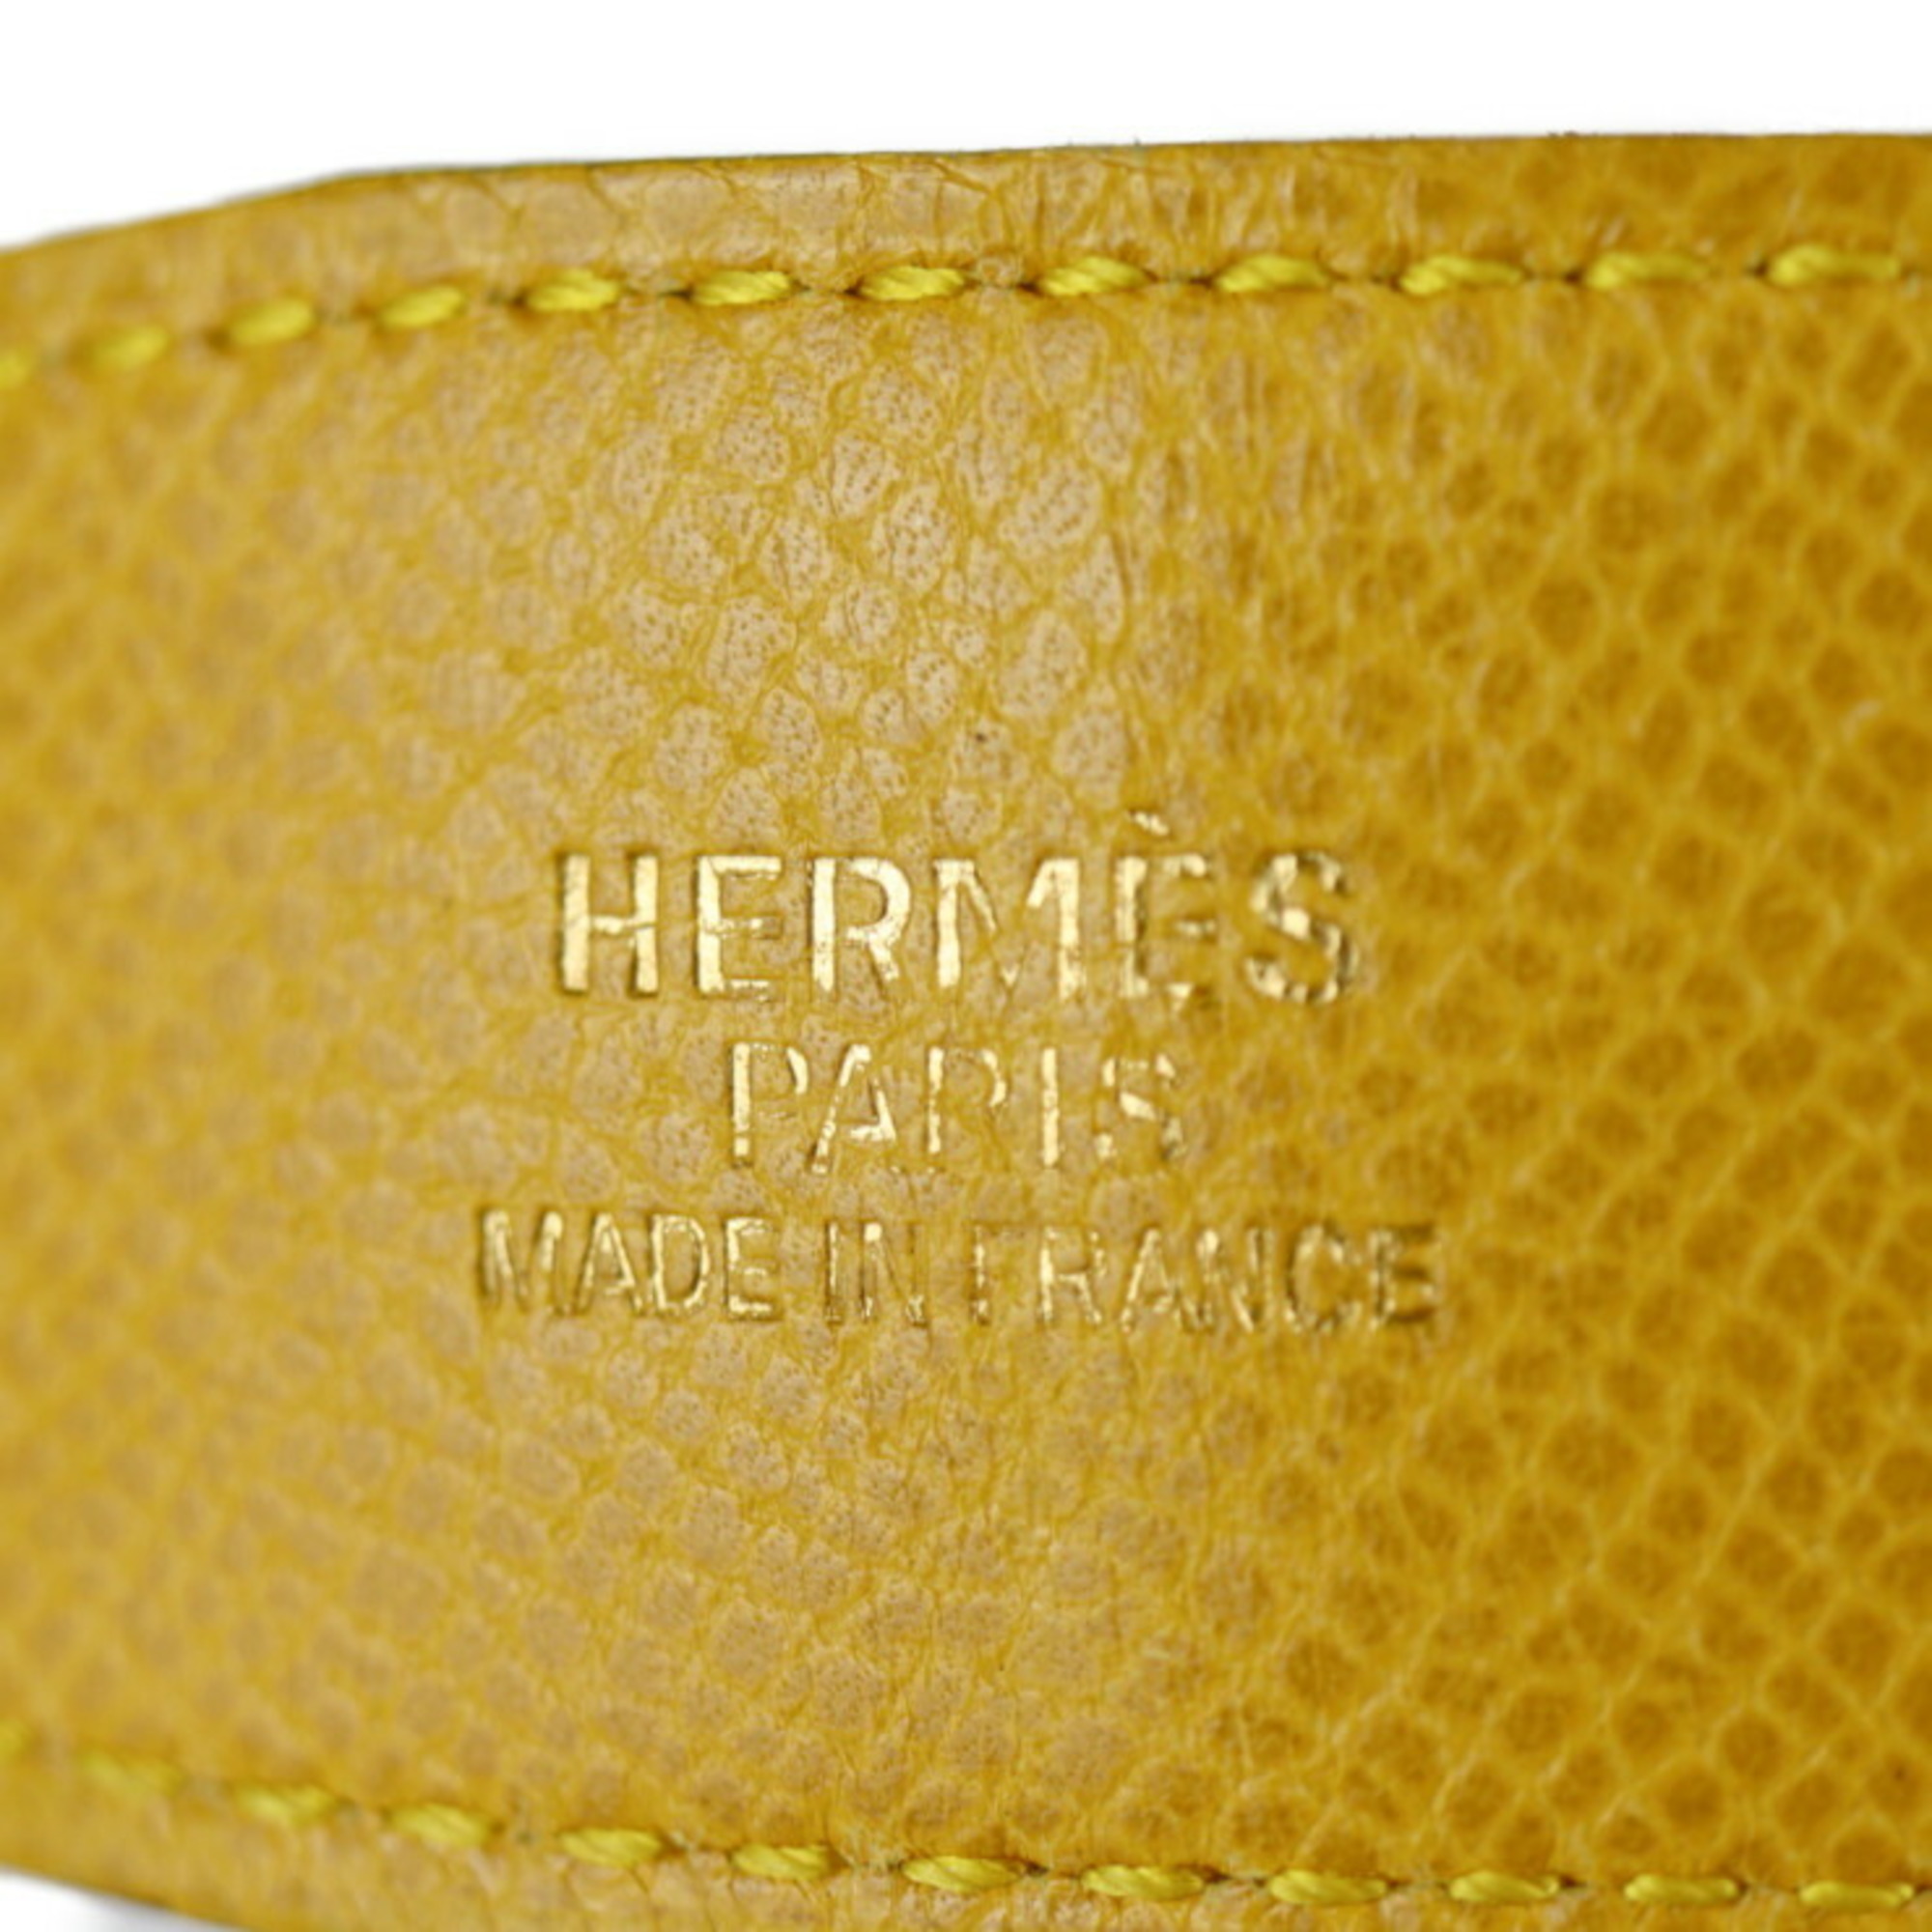 Hermes 32mm Black Box/Gold Epsom Leather Belt Size 65